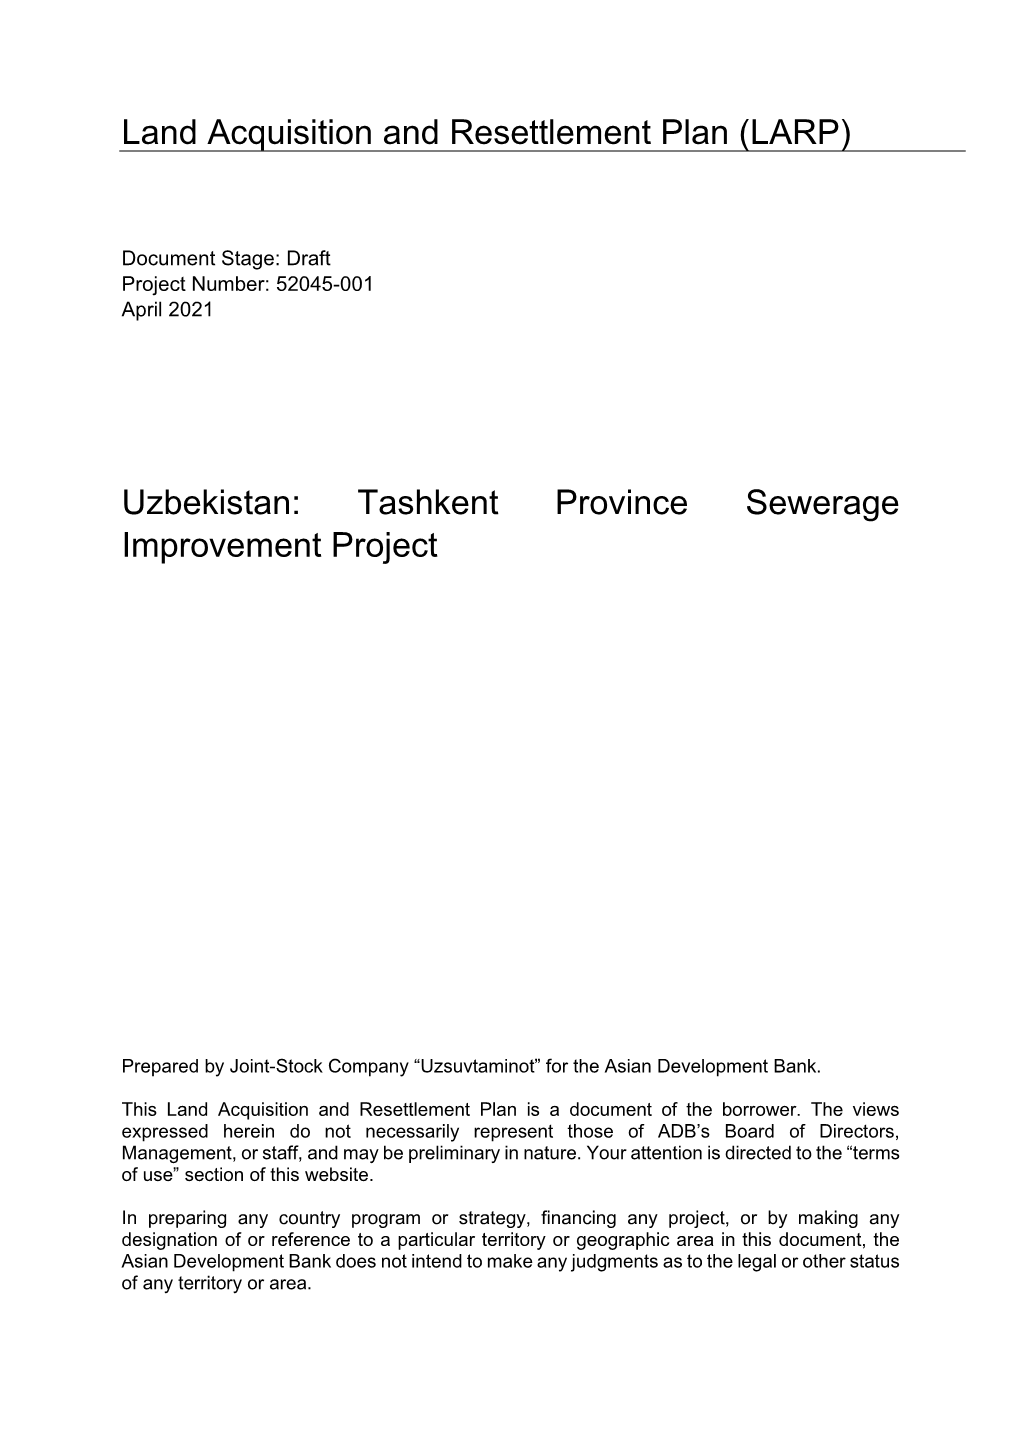 52045-001: Tashkent Province Sewerage Improvement Project